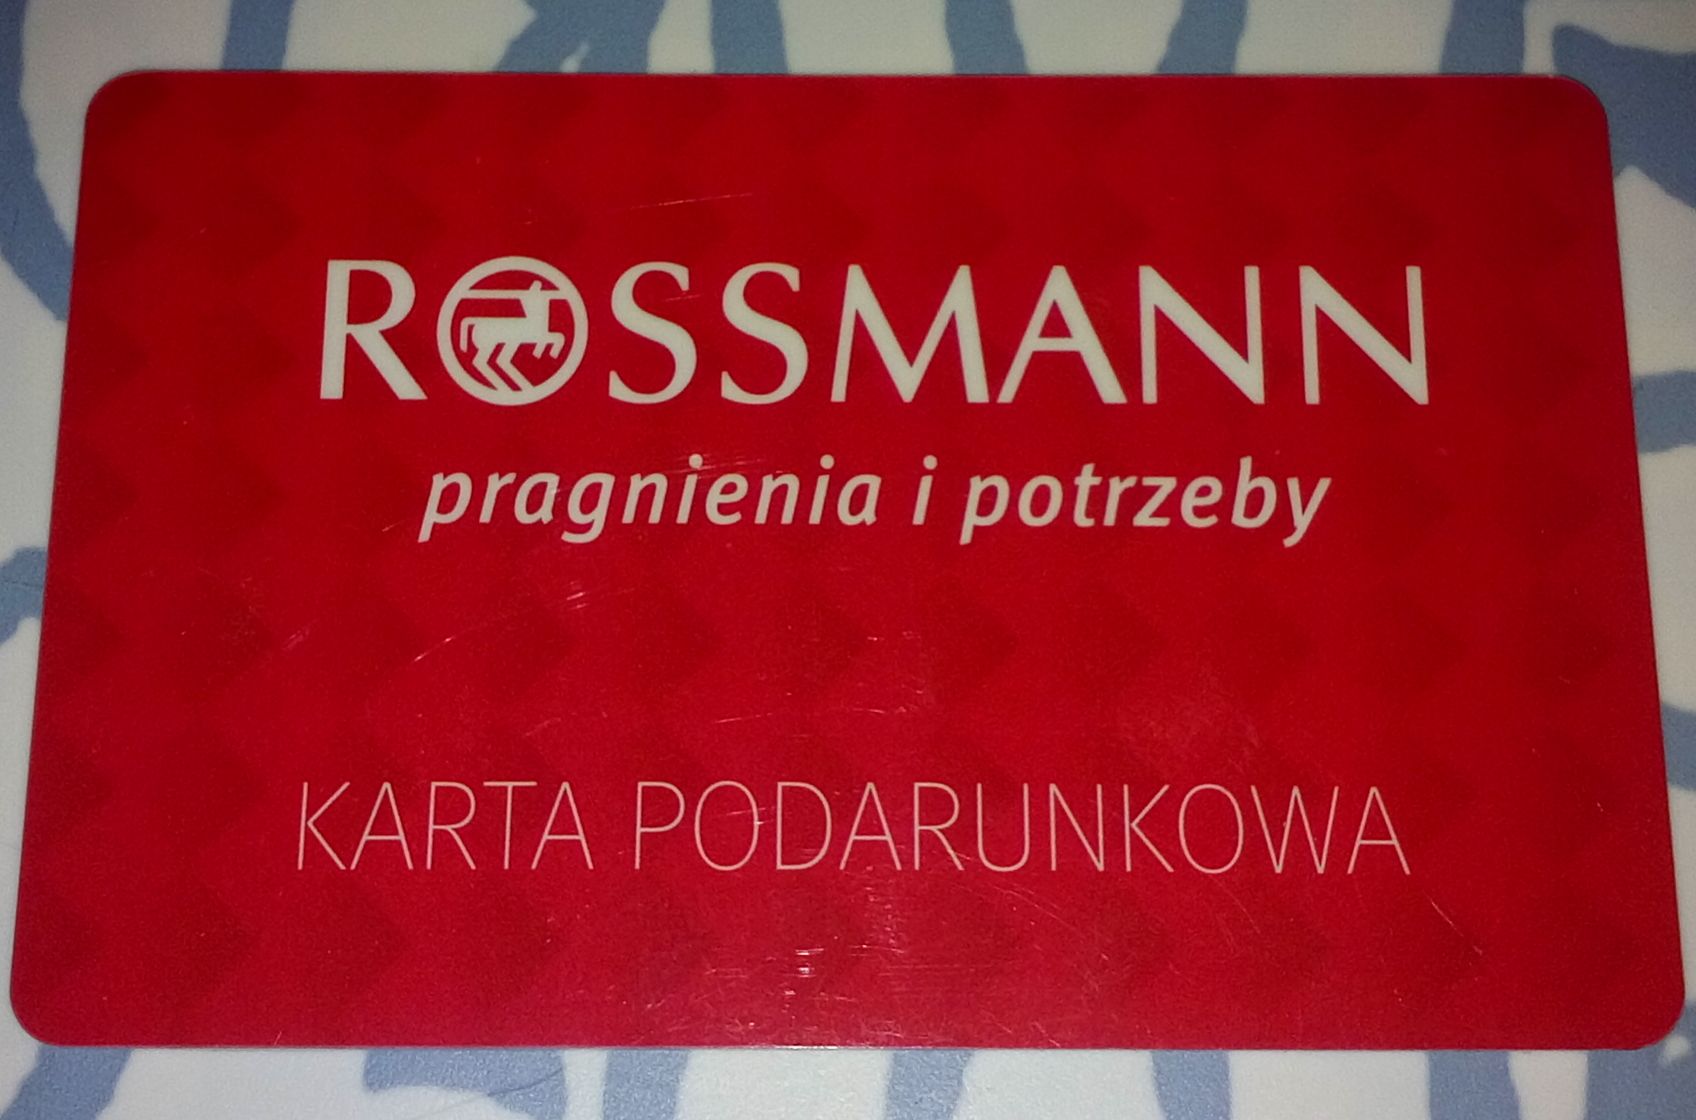 Karta podarunkowa Rossmann - 7042992855 - oficjalne archiwum Allegro